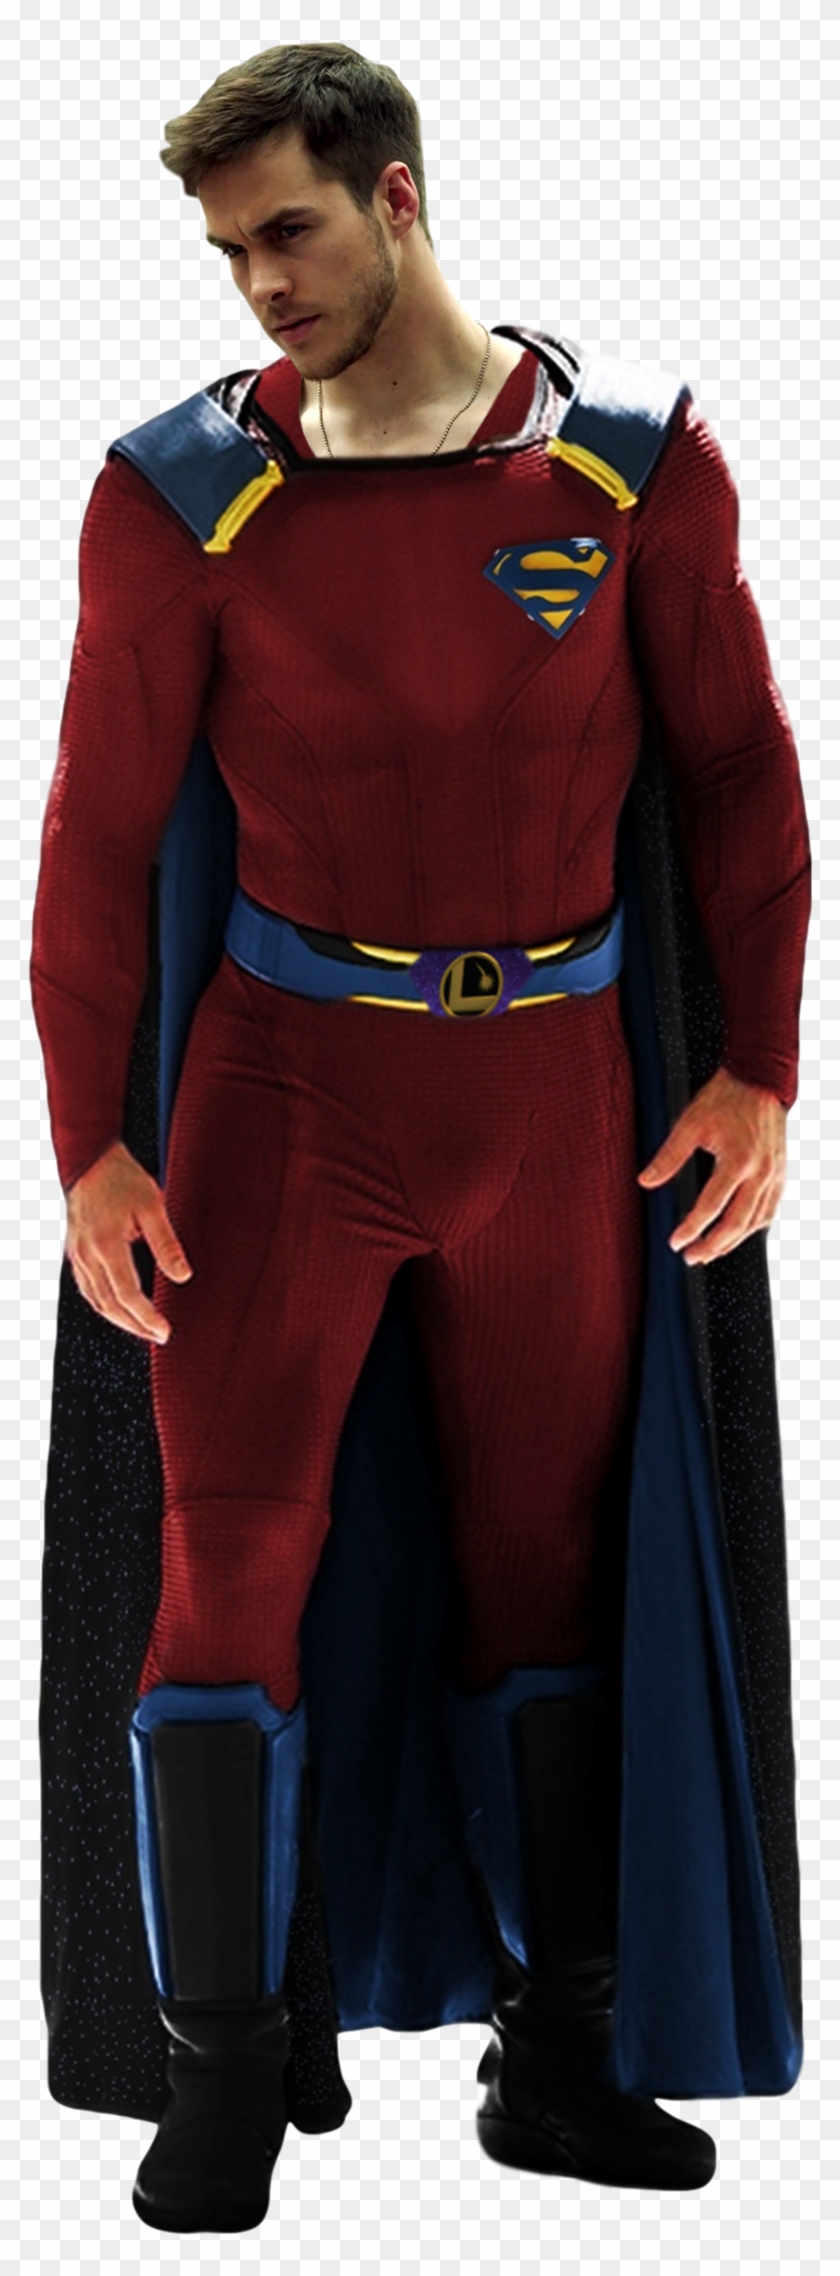 Chris Wood, Supergirl Mon El, Supergirl Superman, Supergirl - Mon El Superhero Costume Clipart